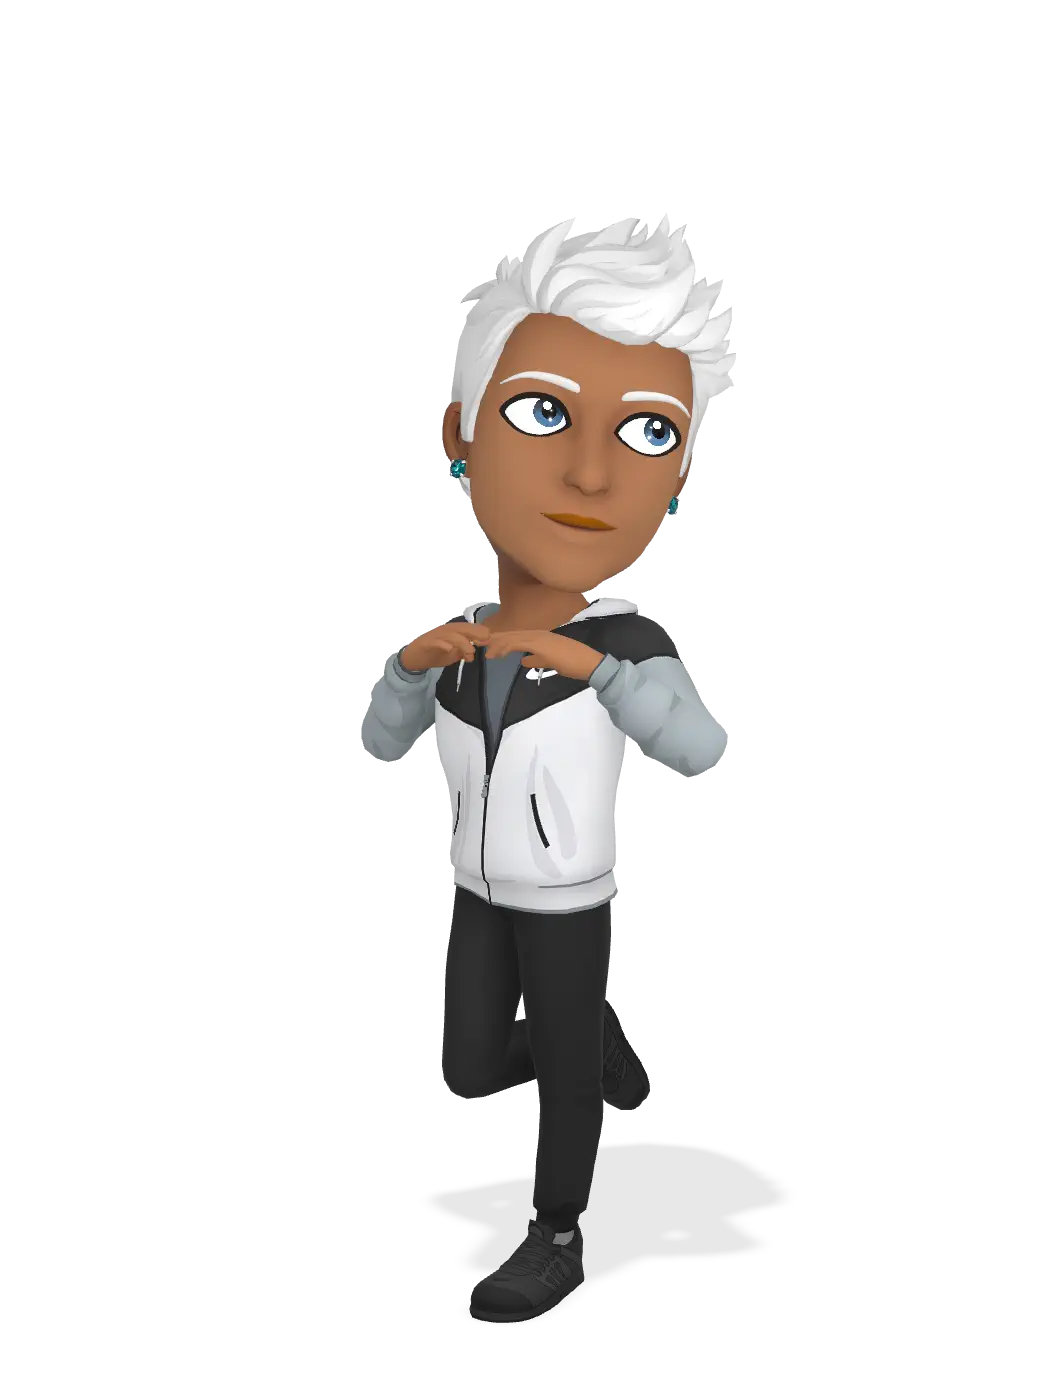 3D Bitmoji for tylerjpavlikfdn avatar